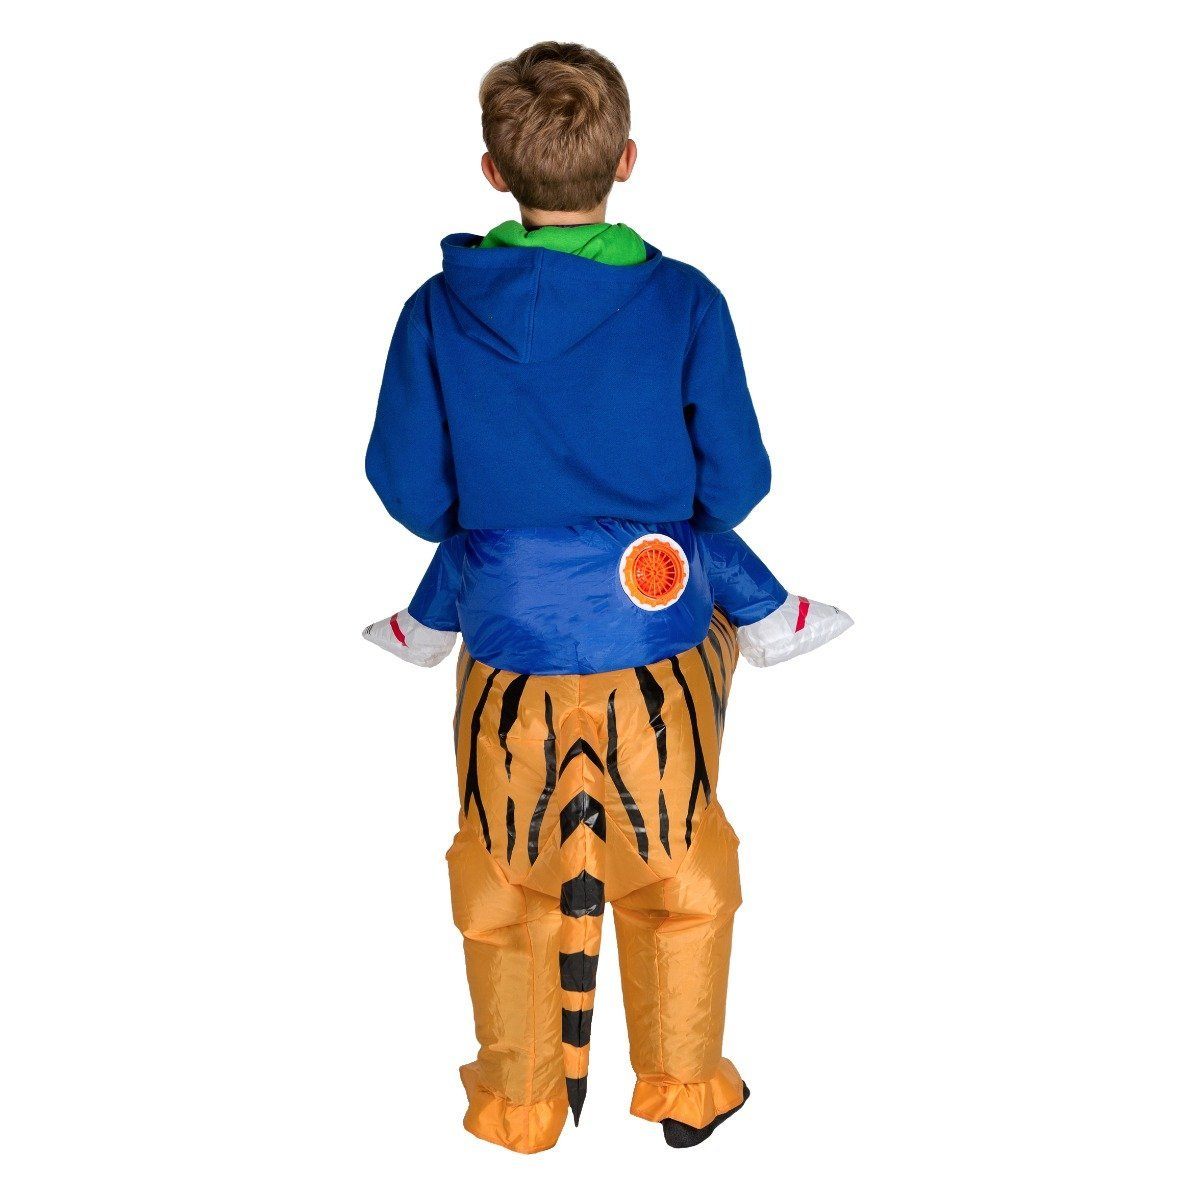 Fancy Dress - Kids Inflatable Tiger Costume